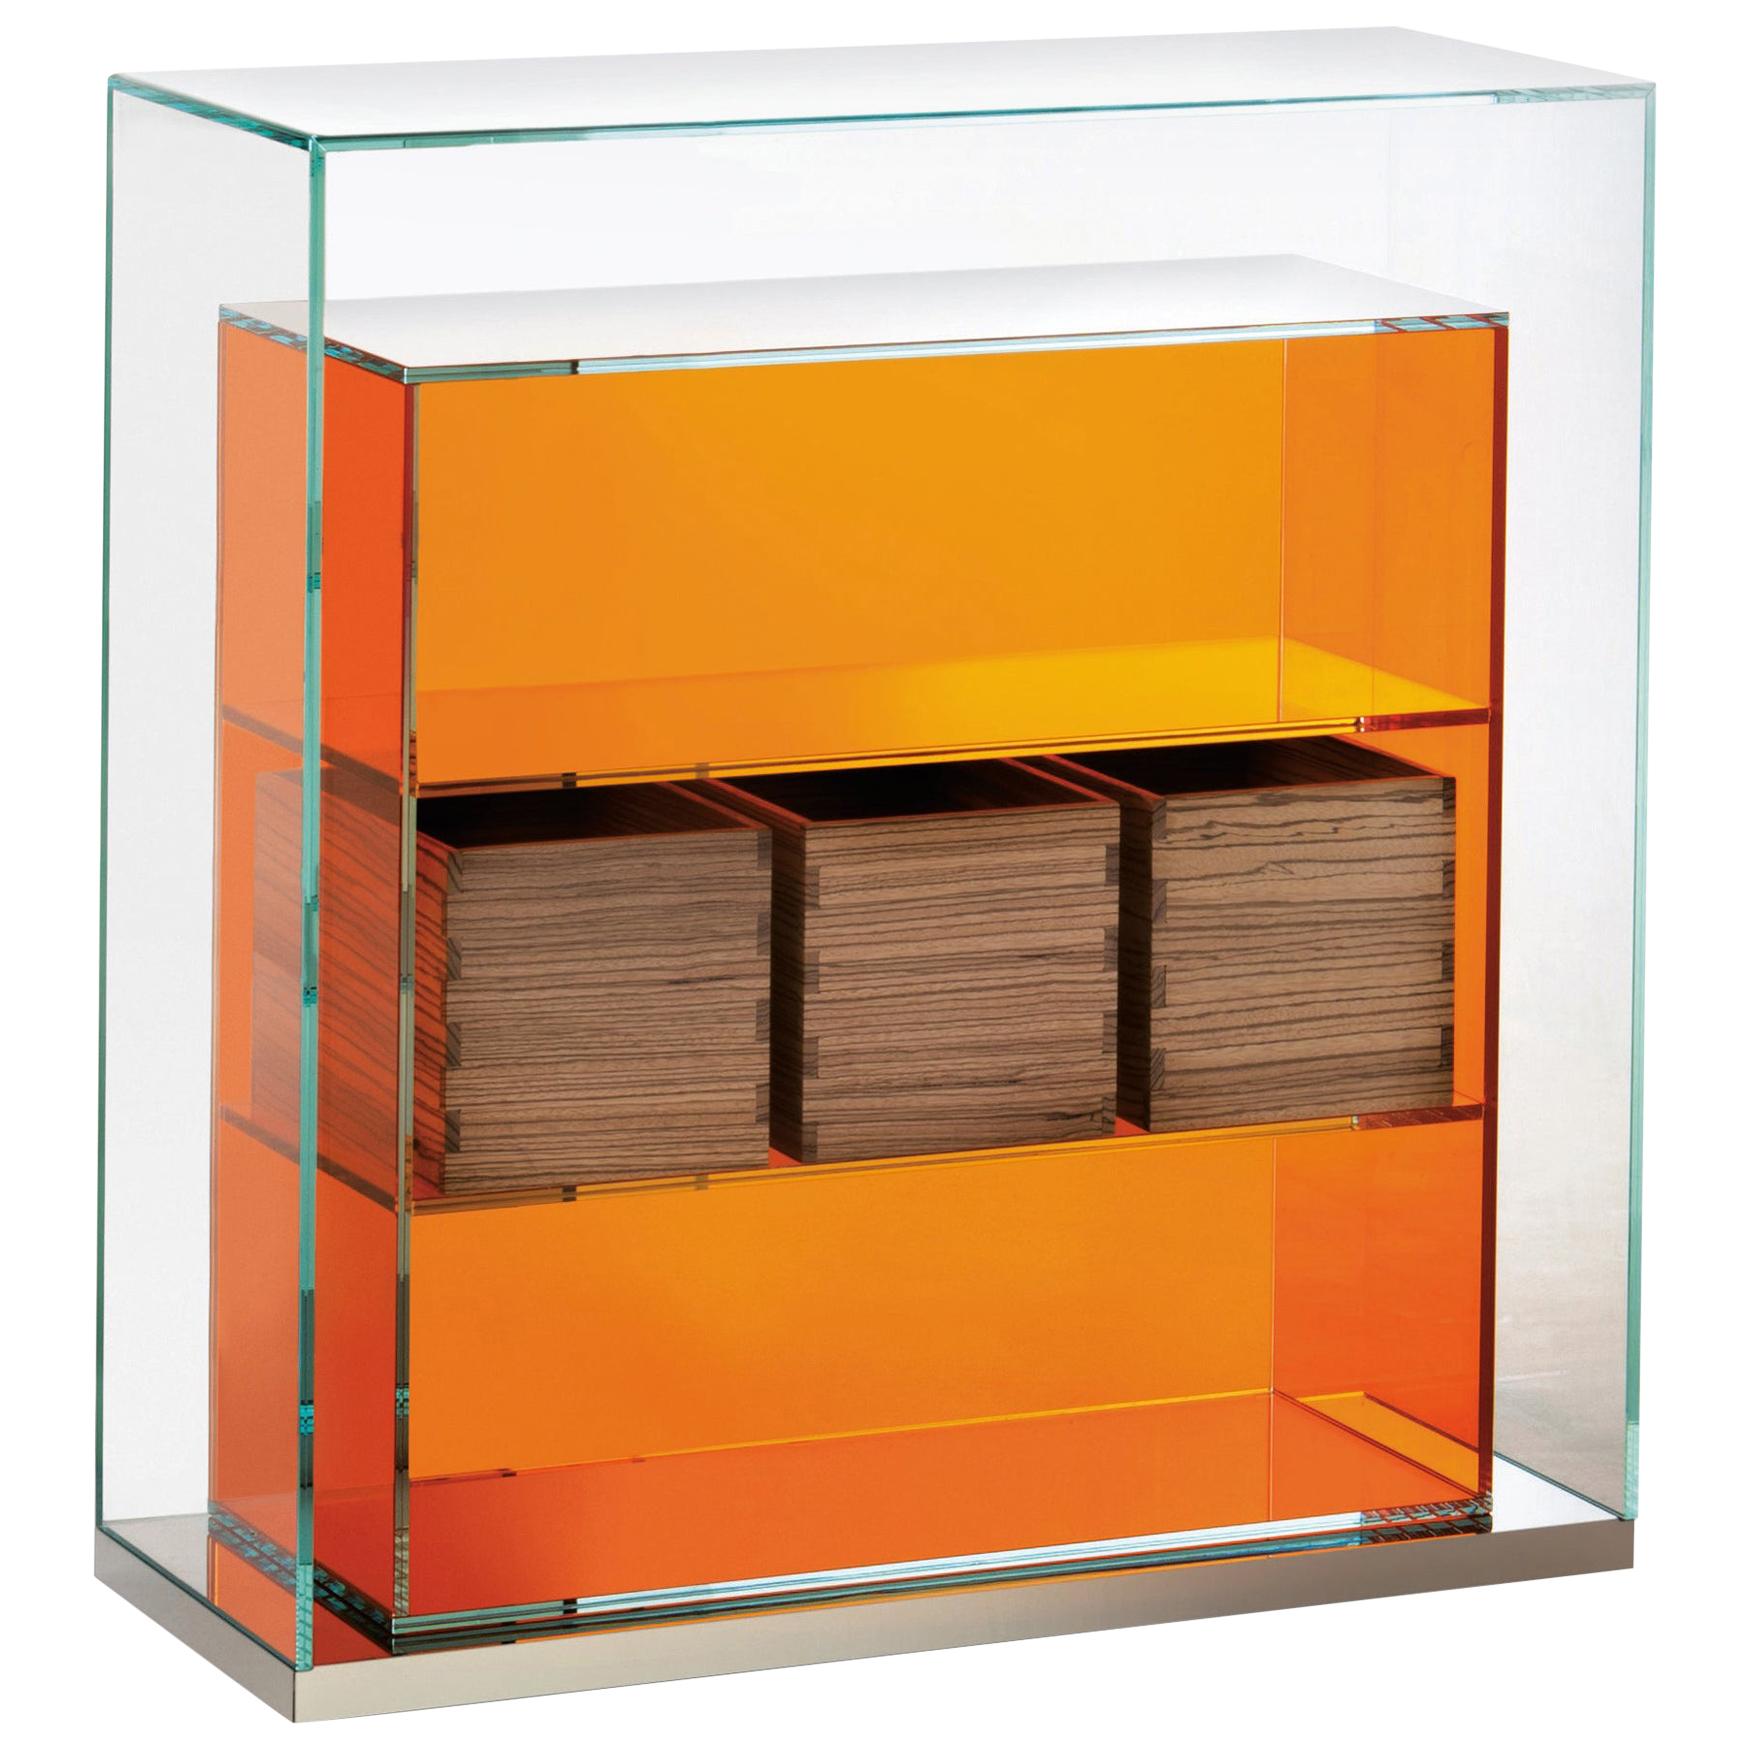 BOXINBOX BIB01 Storage Unit, by Philippe Starck from Glas Italia